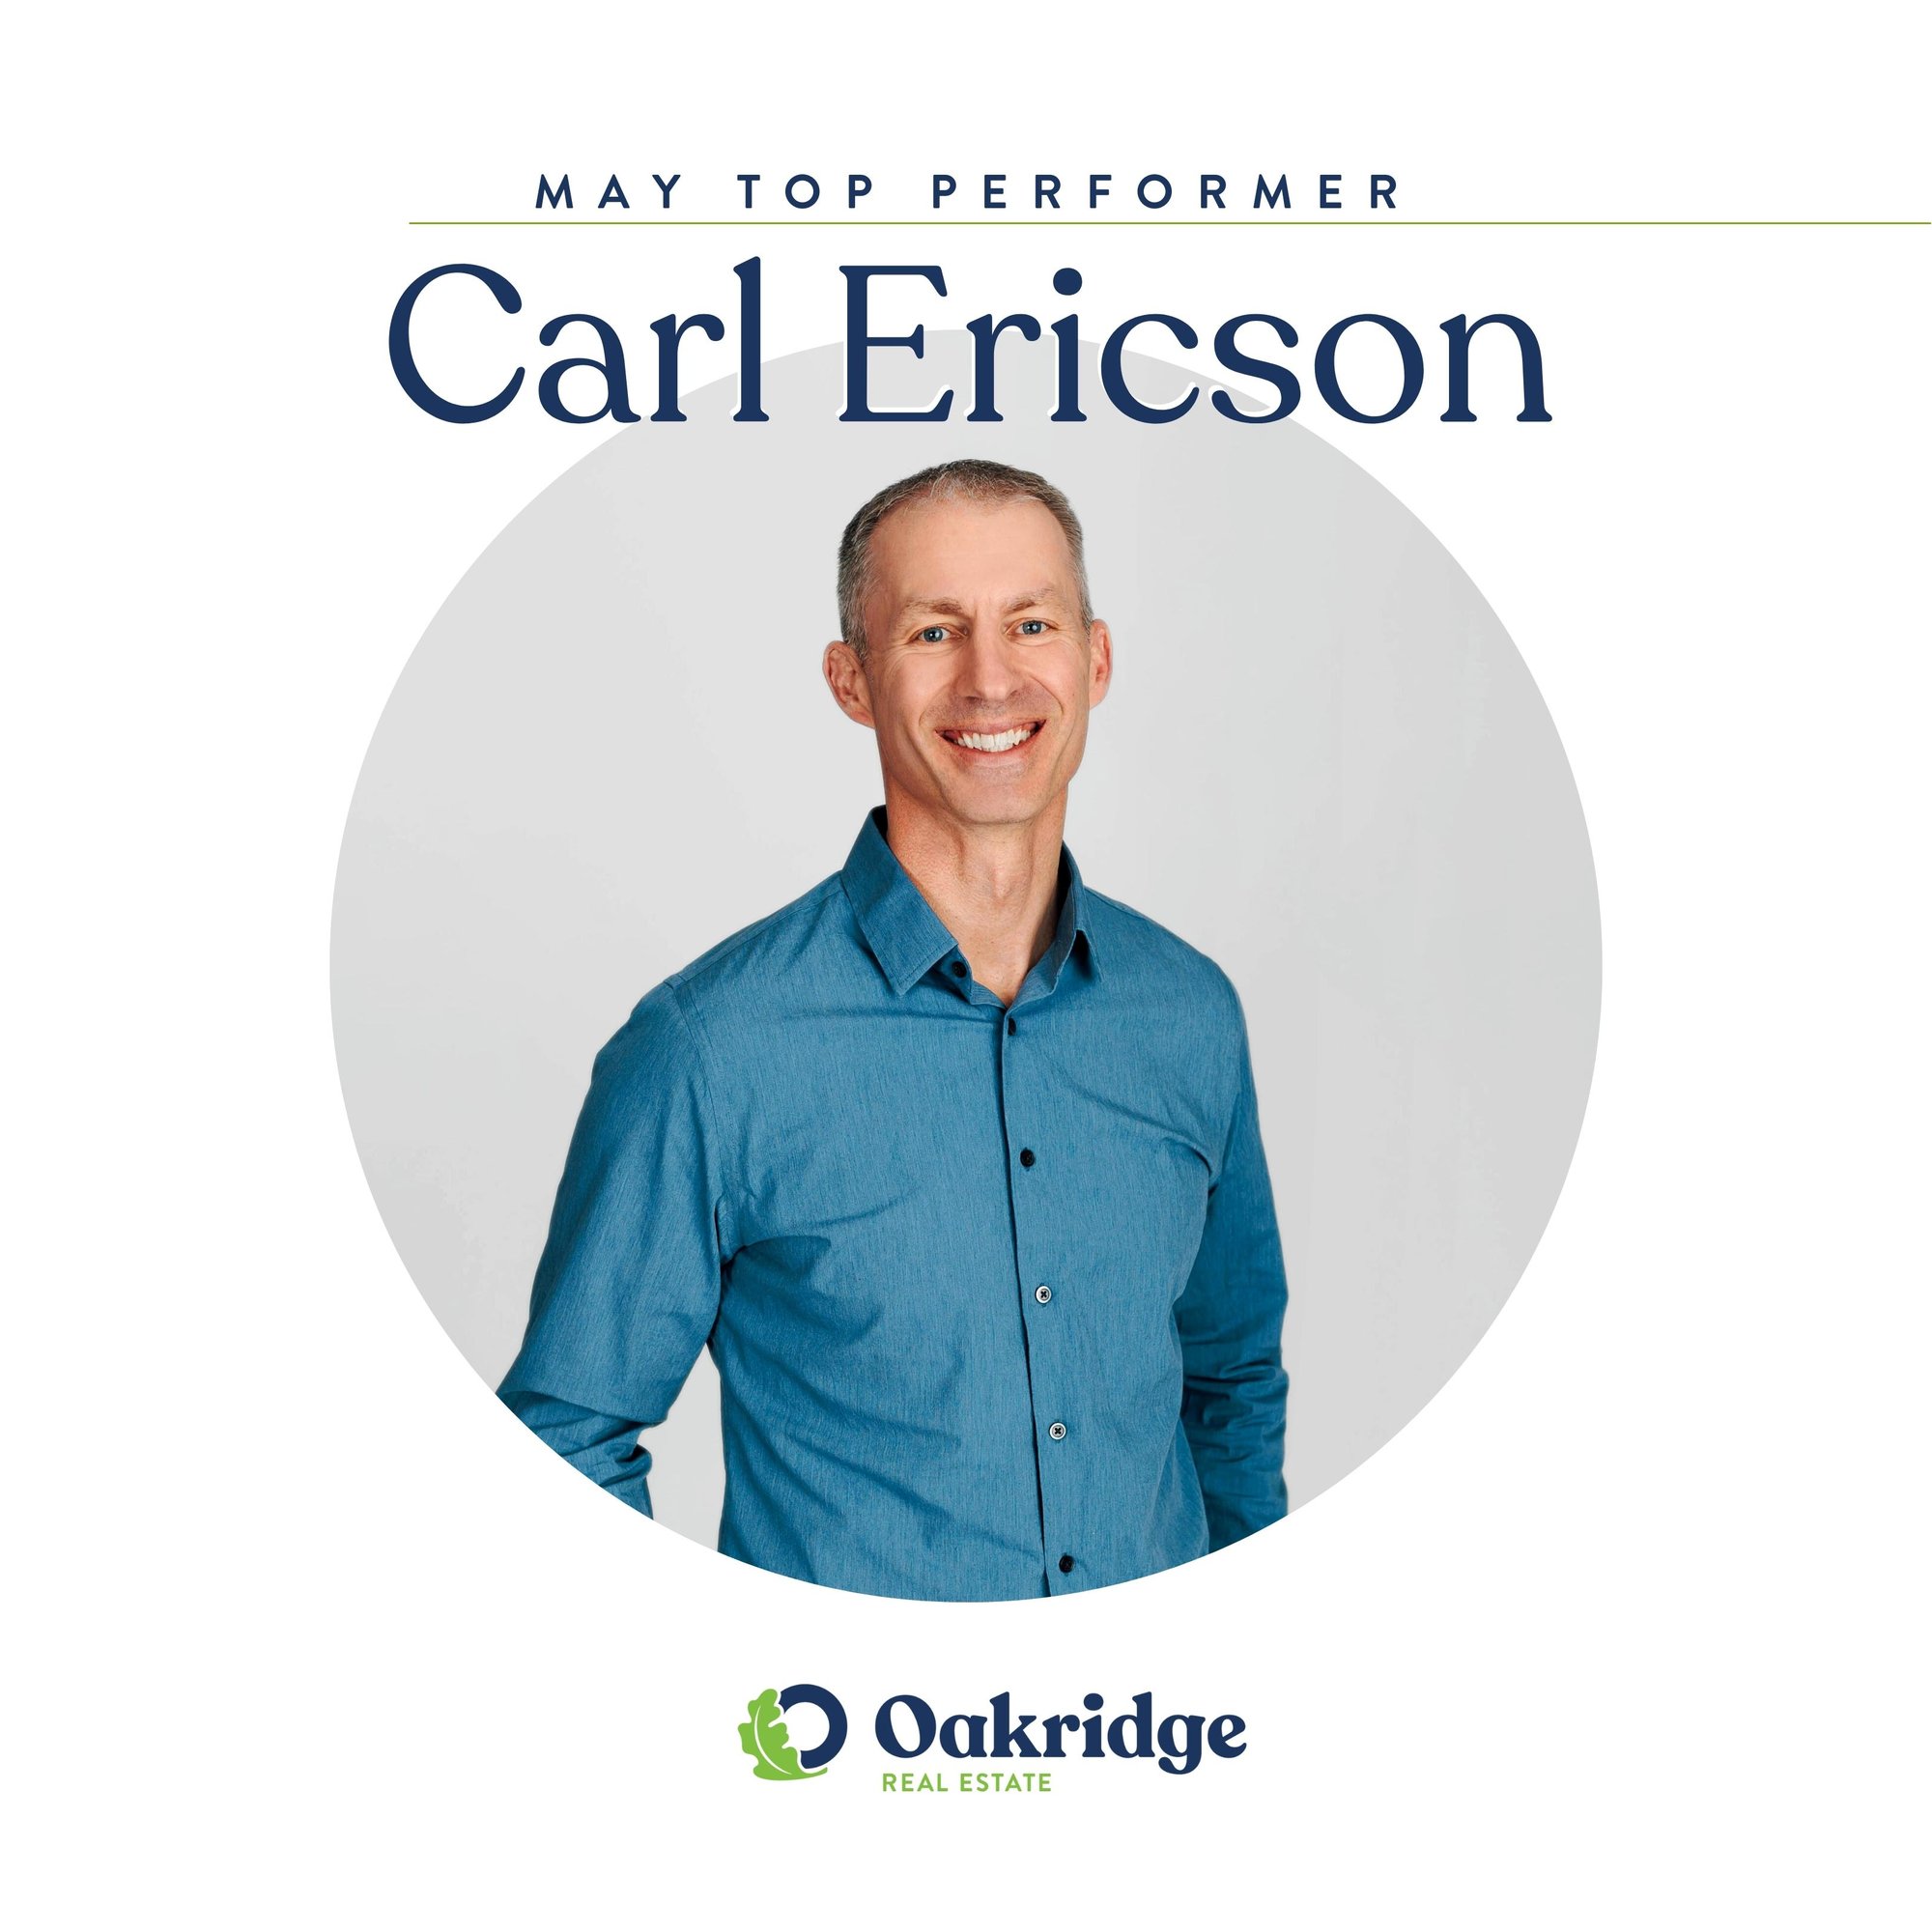 Carl Ericson May Top Performer Oakridge Real Estate